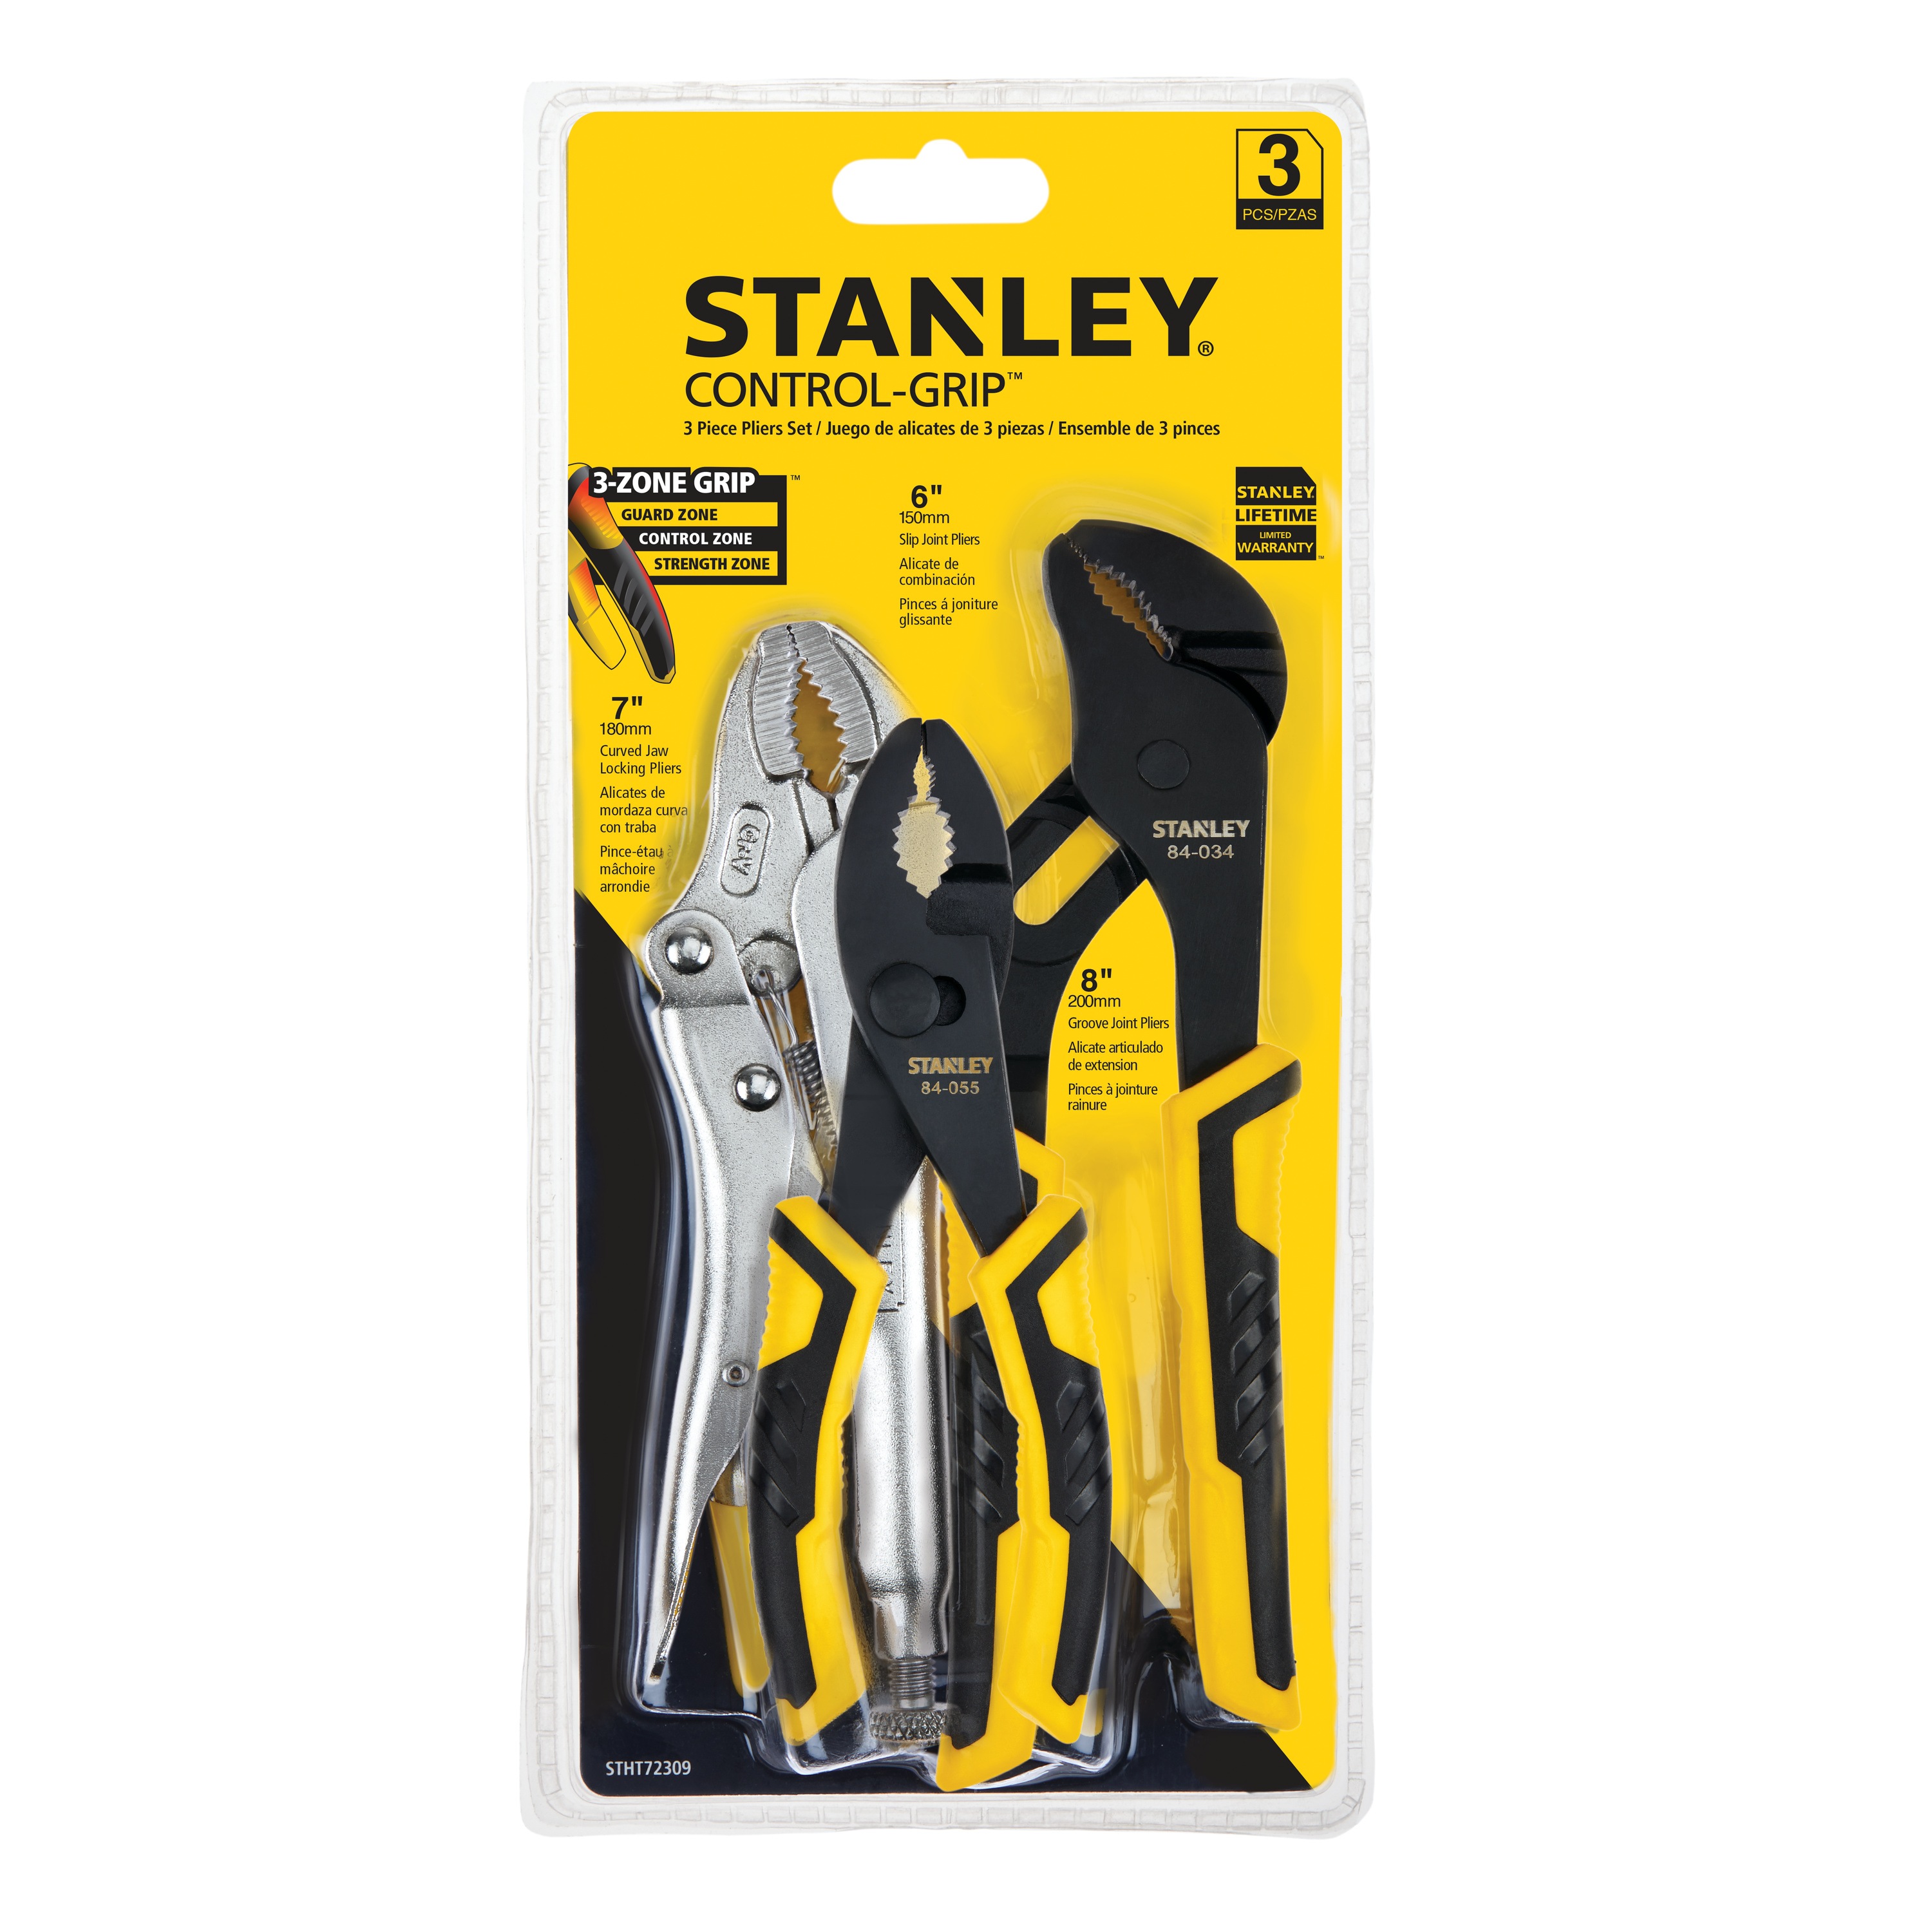 Stanley Tools - 3 pc Pliers Set - STHT72309